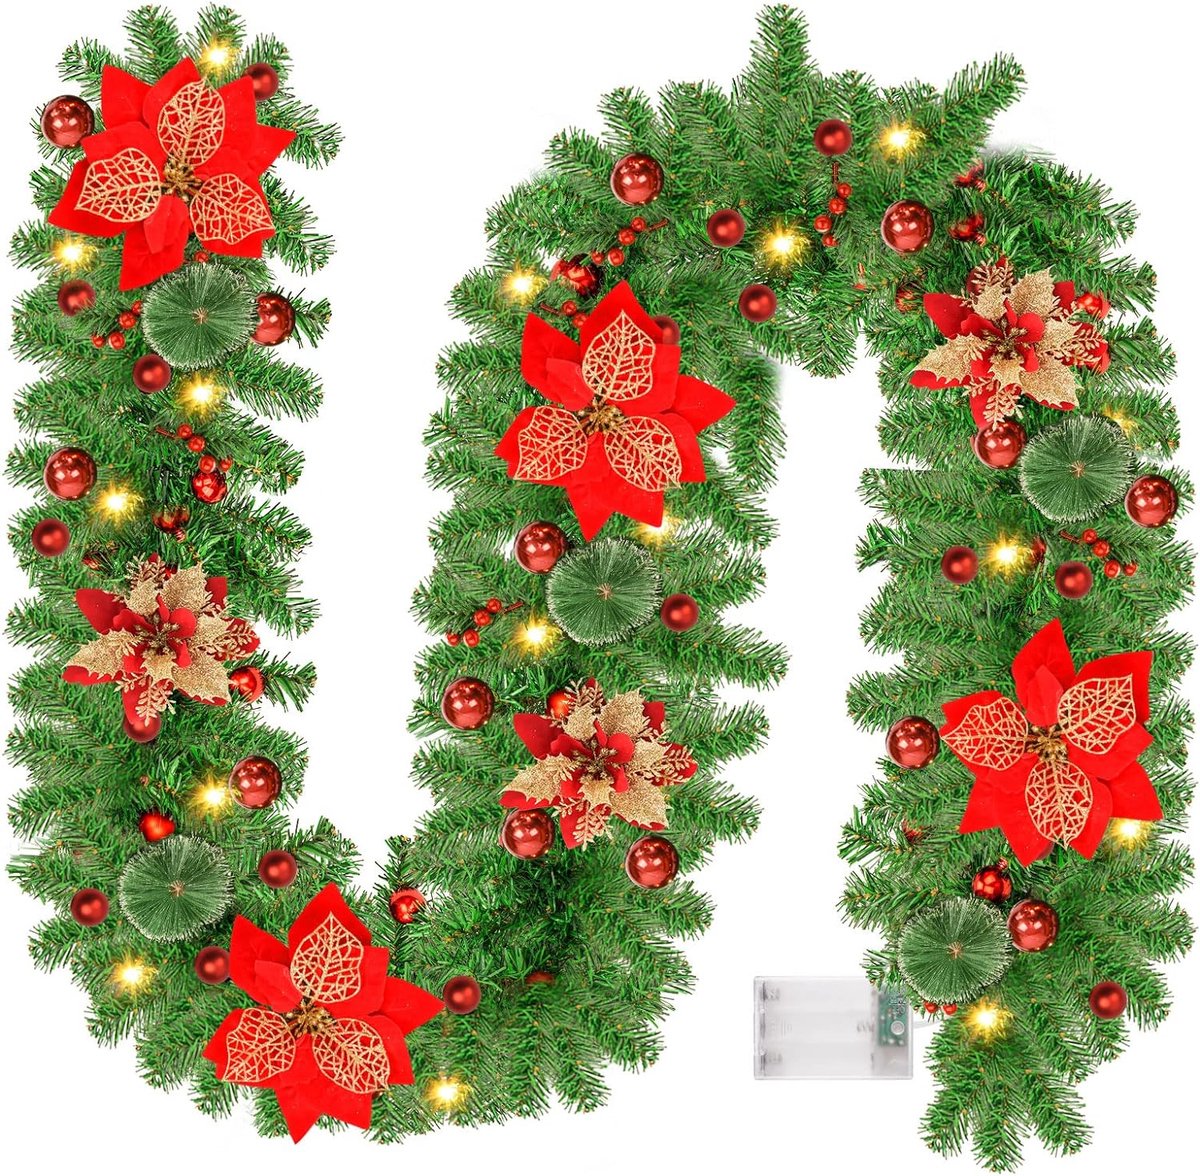 Kerstslinger 270 cm, kunstmatige decoratieve slinger met ledverlichting, kerstdecoratie, slinger, dennenslinger, hangende slinger, flexibel inzetbaar (rood)